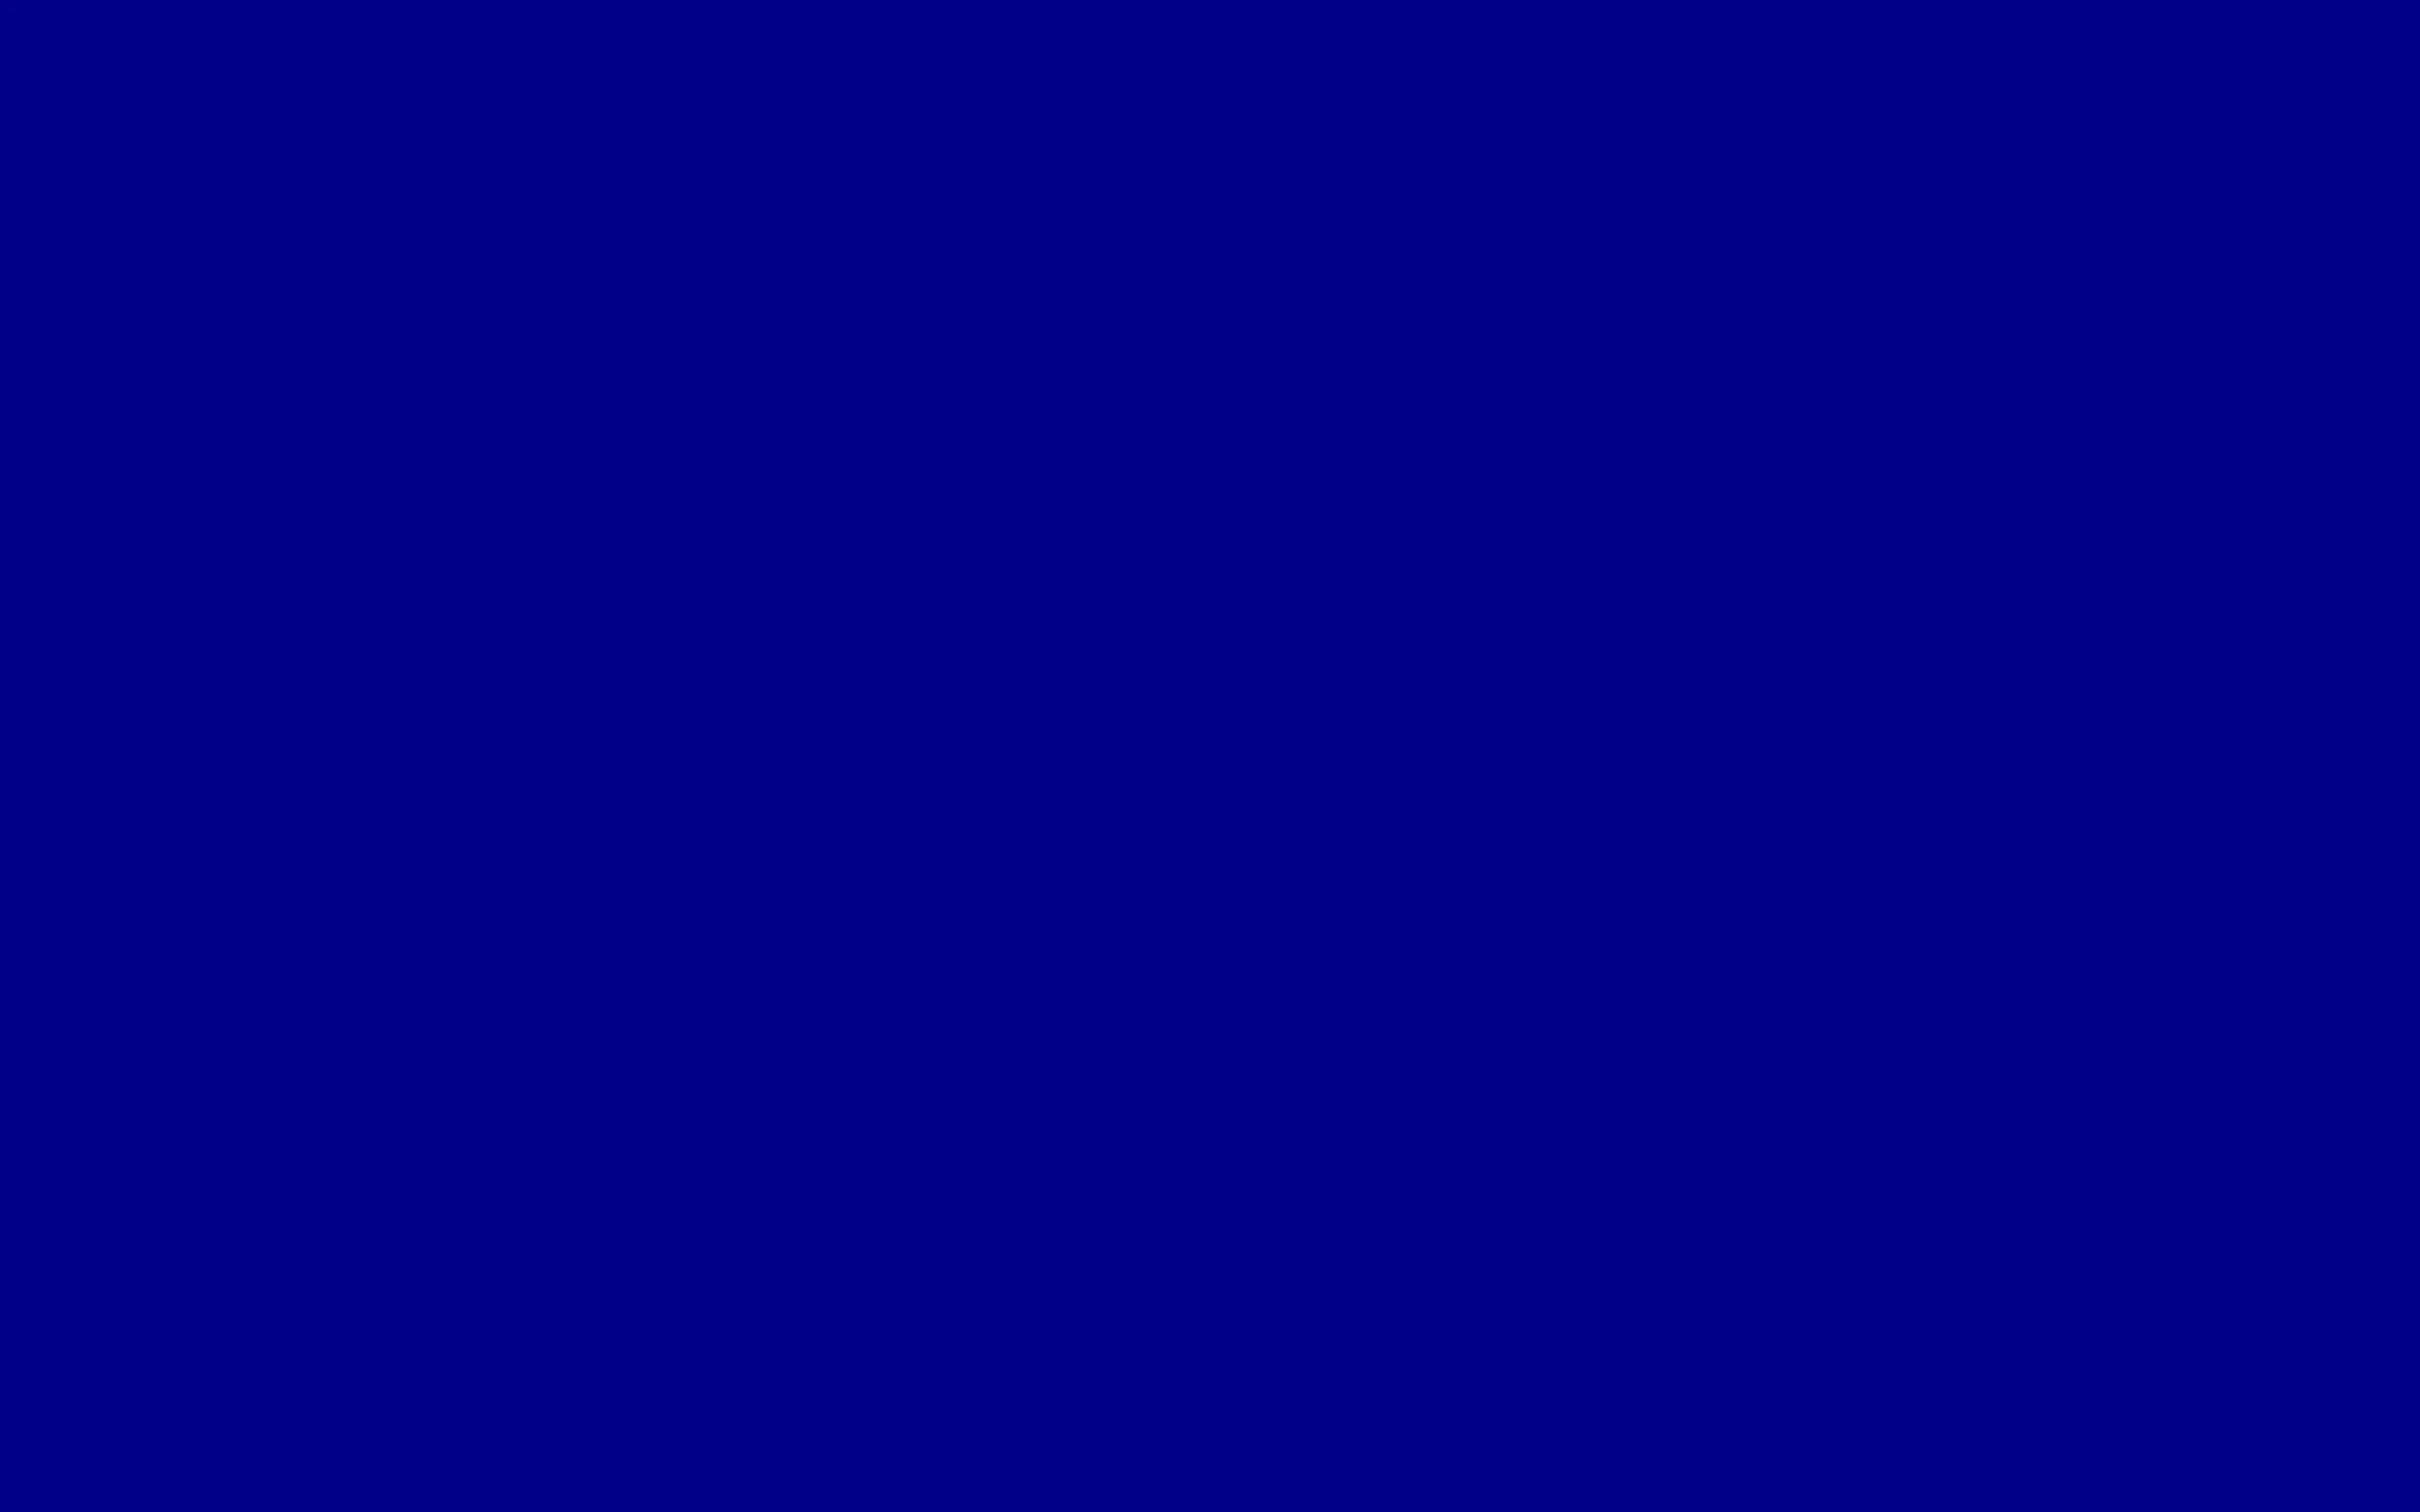 Темно синий цвет фон. Образец цвета синий. 7fffd4 цвет. Цвет 205.